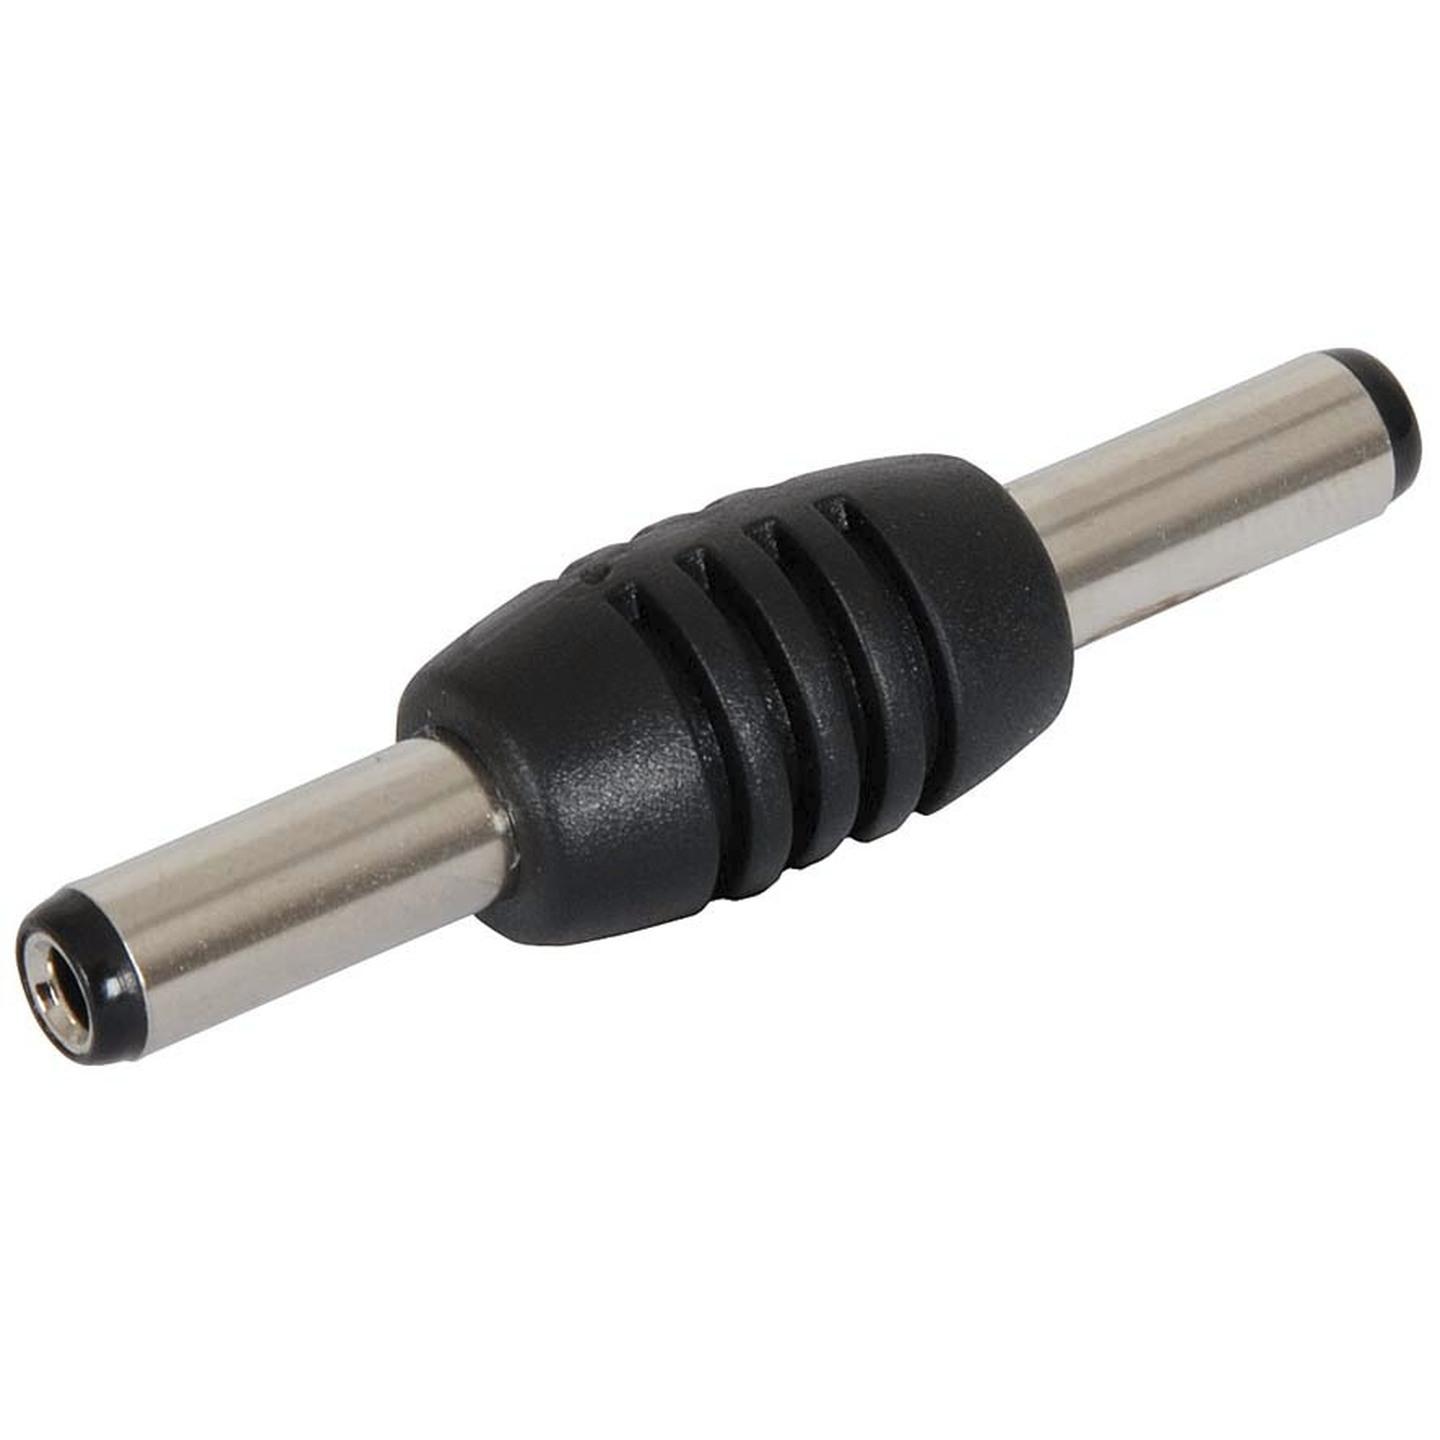 2.5mm DC Plug to 2.5mm DC Plug Adaptor